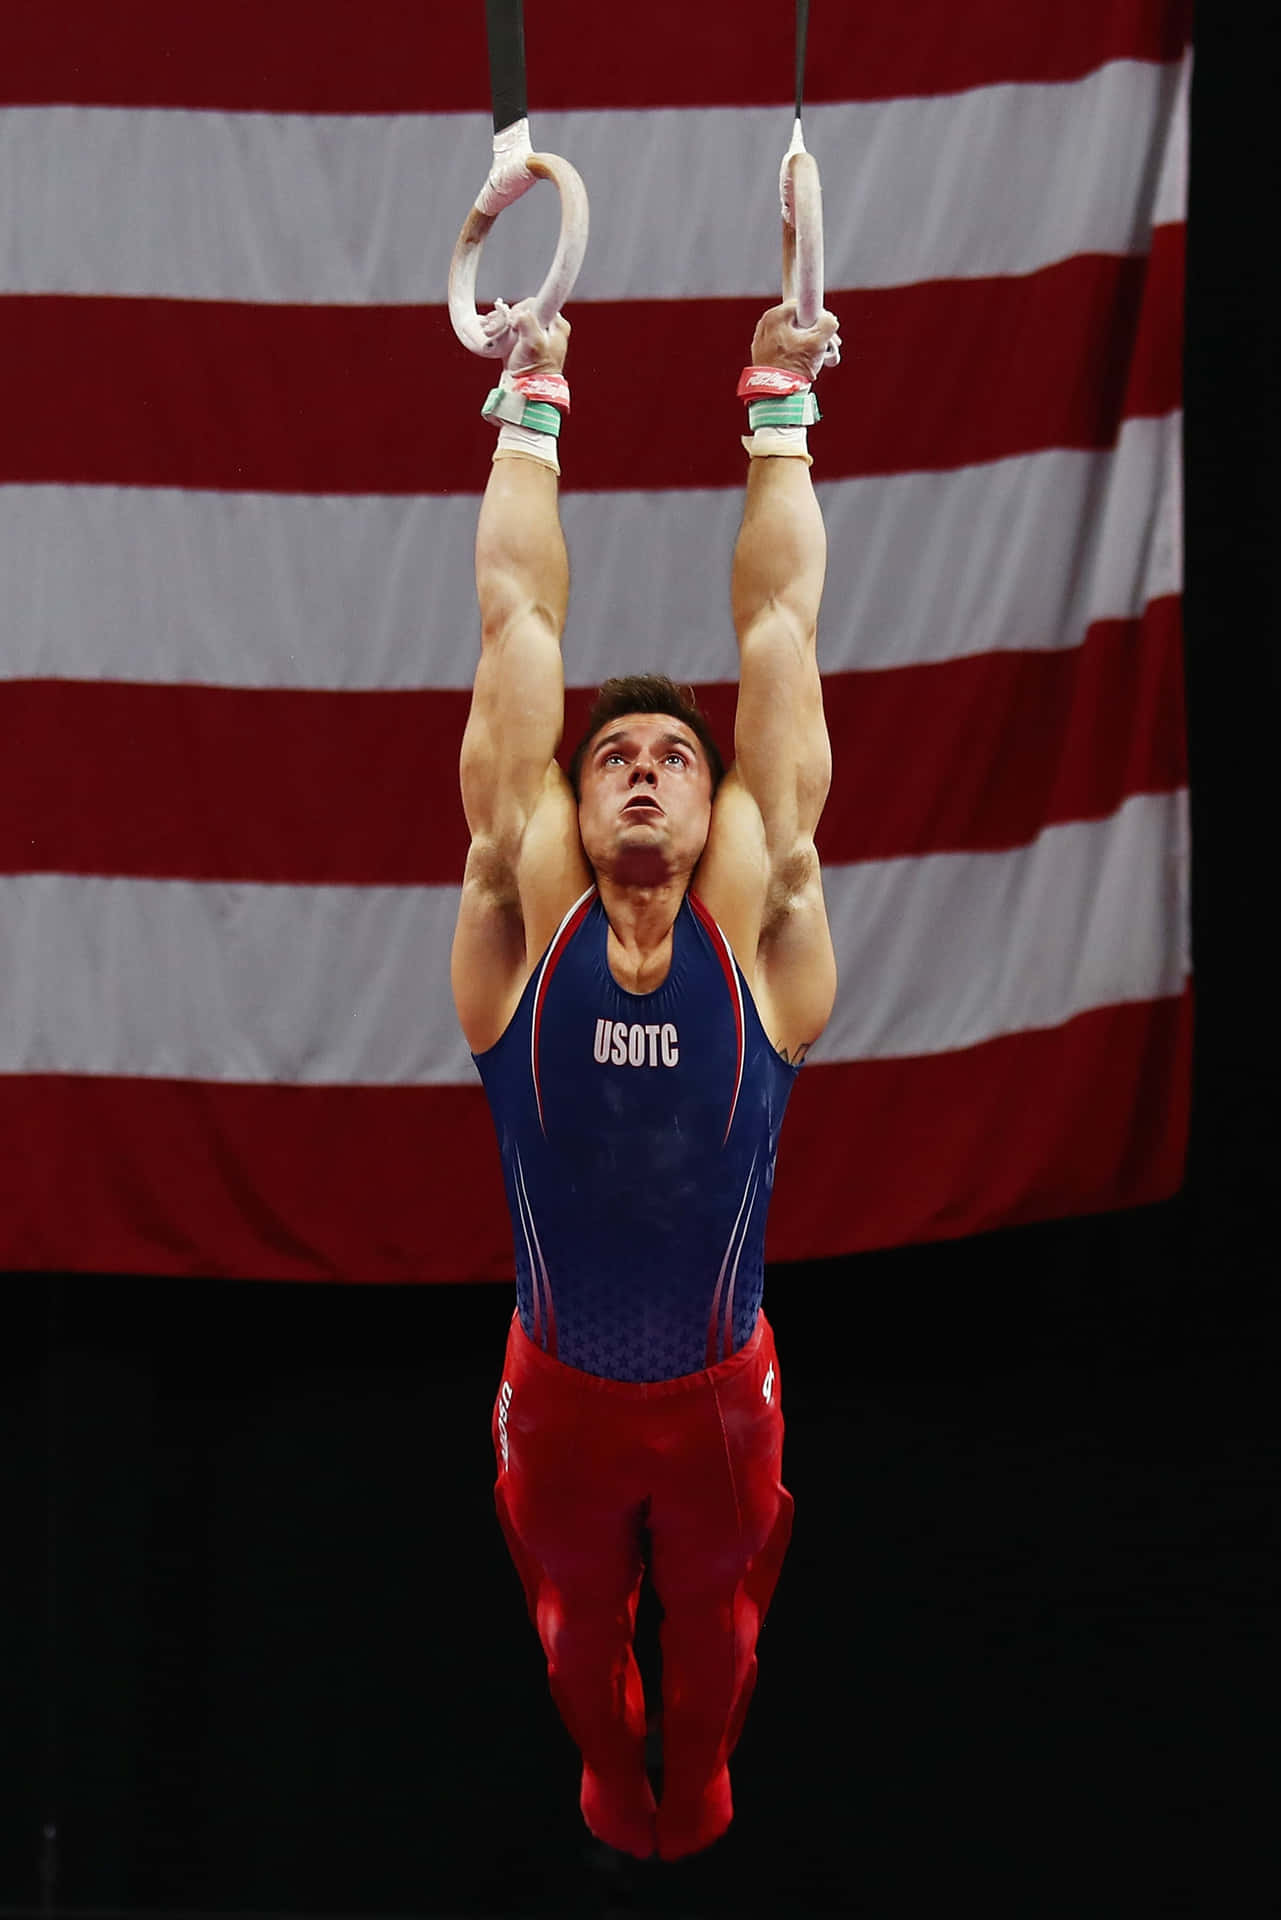 A beautiful gymnast performing a back handspring